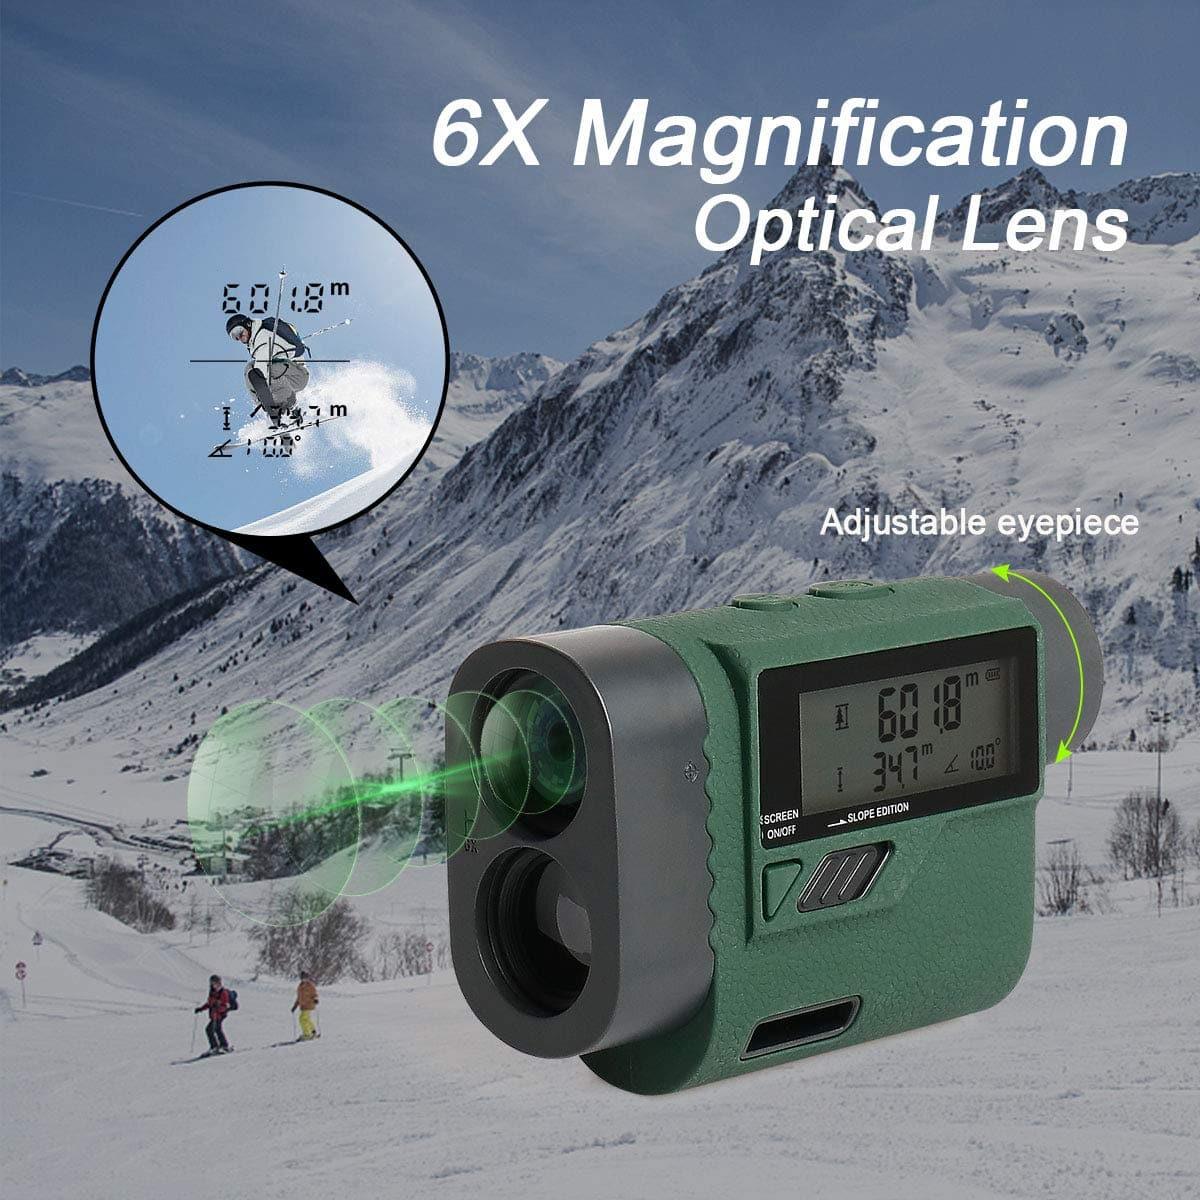 Huepar HLR1000 - 1000M LCD Golf Entfernungsmesser HUEPAR DE - Laserniveau